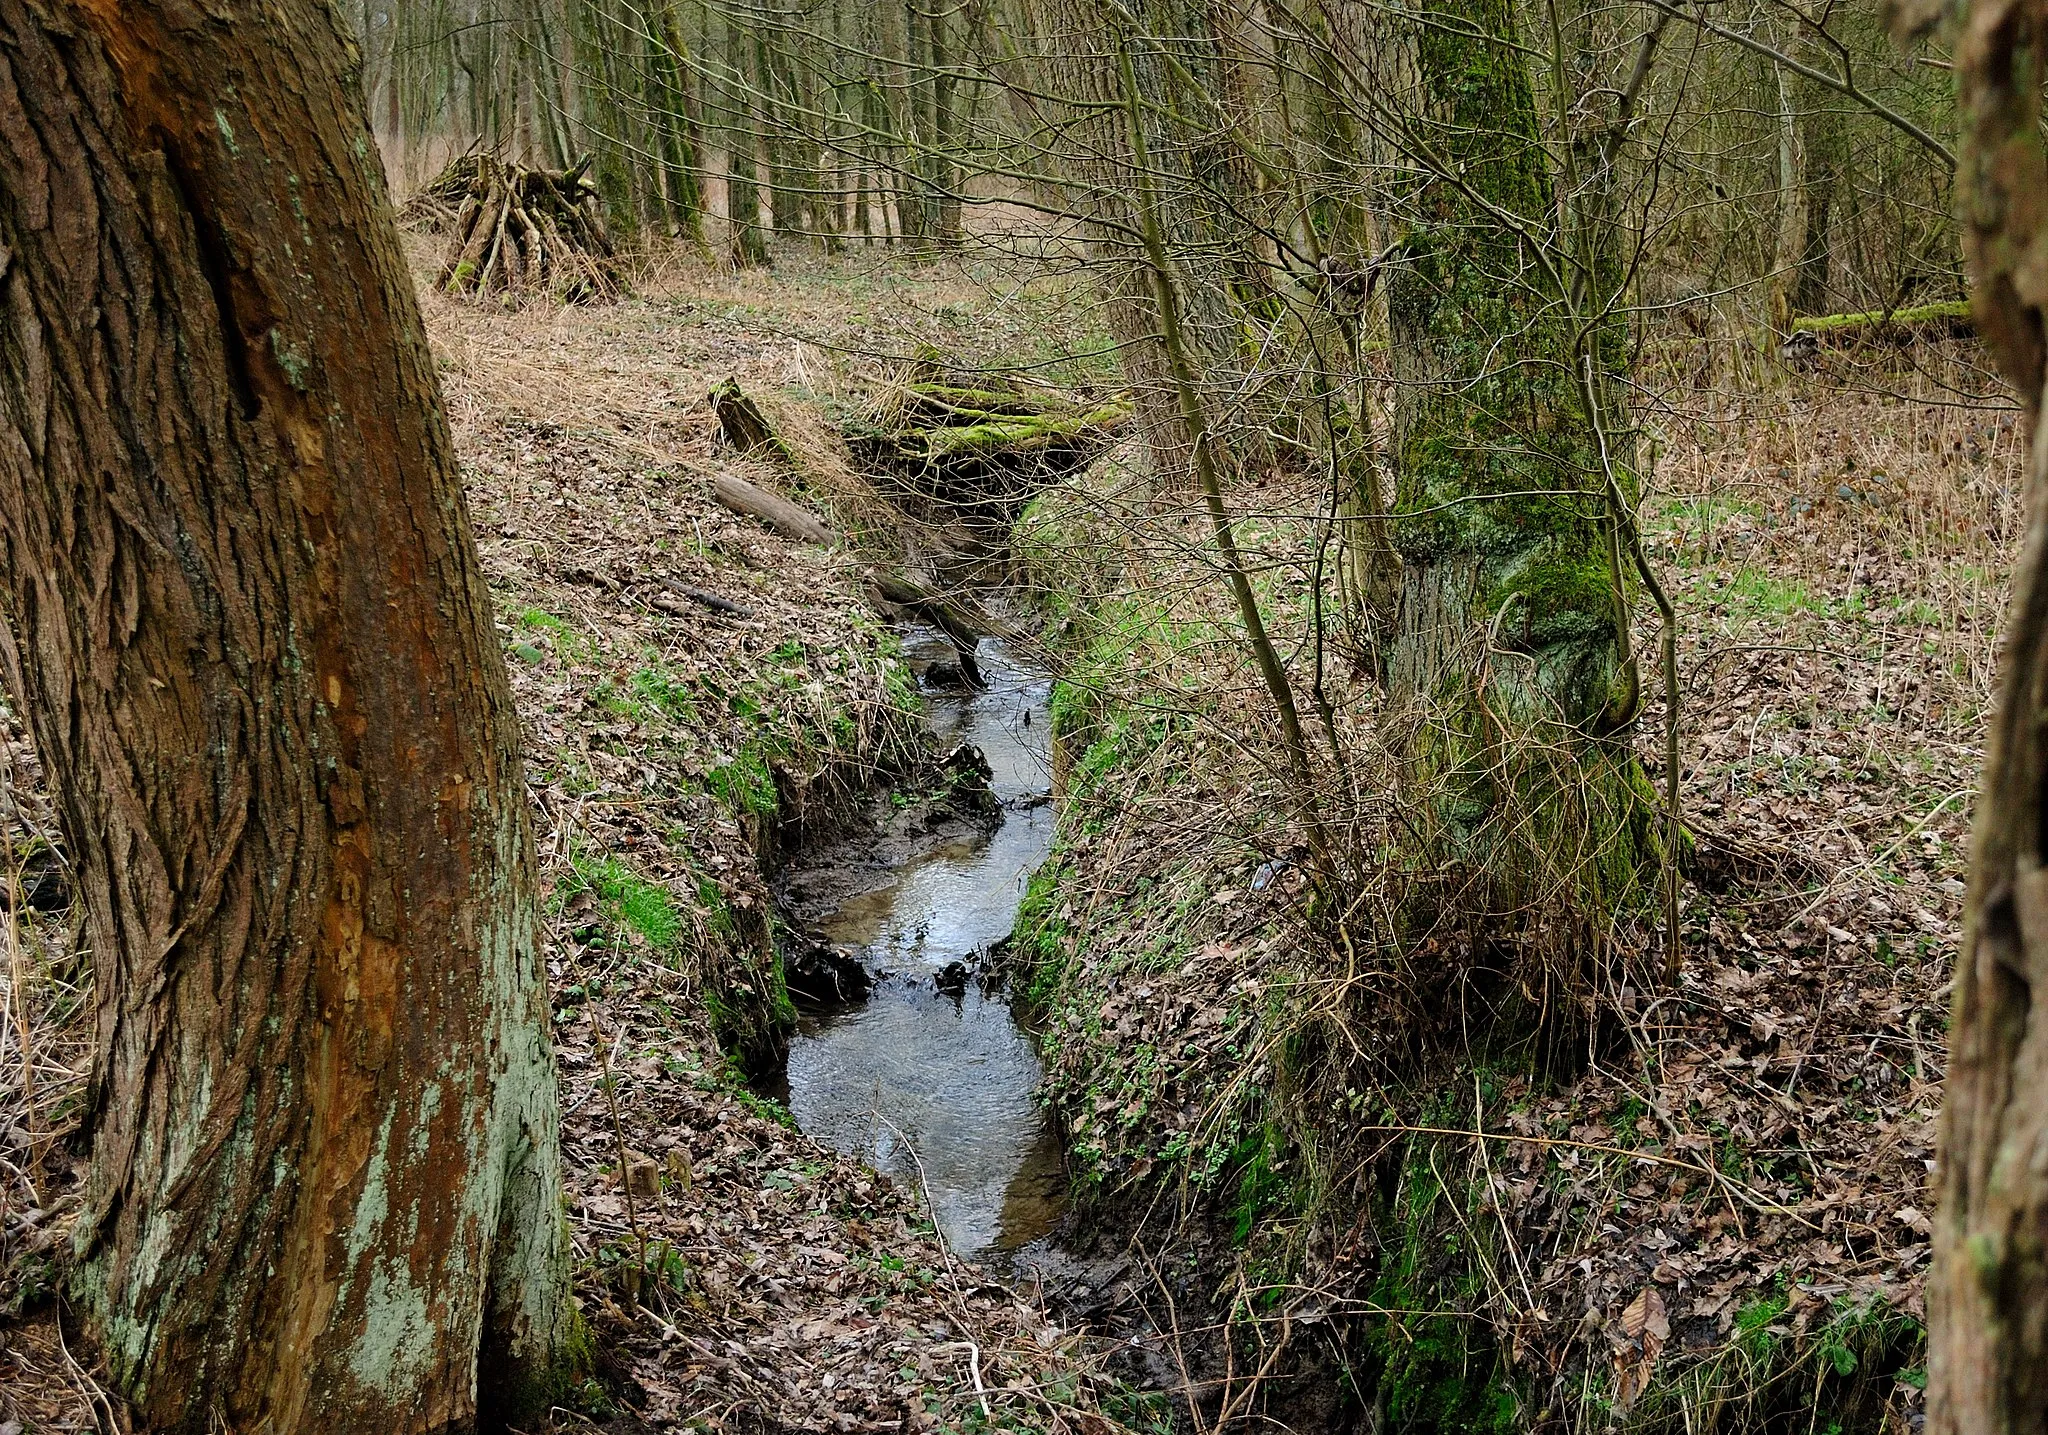 Photo showing: Broekbeek creek at Asse, Belgium. Nikon D60 f=26mm f/5 at 1/100s ISO 400. Processed using Nikon ViewNX 1.5.2 and GIMP 2.6.6.